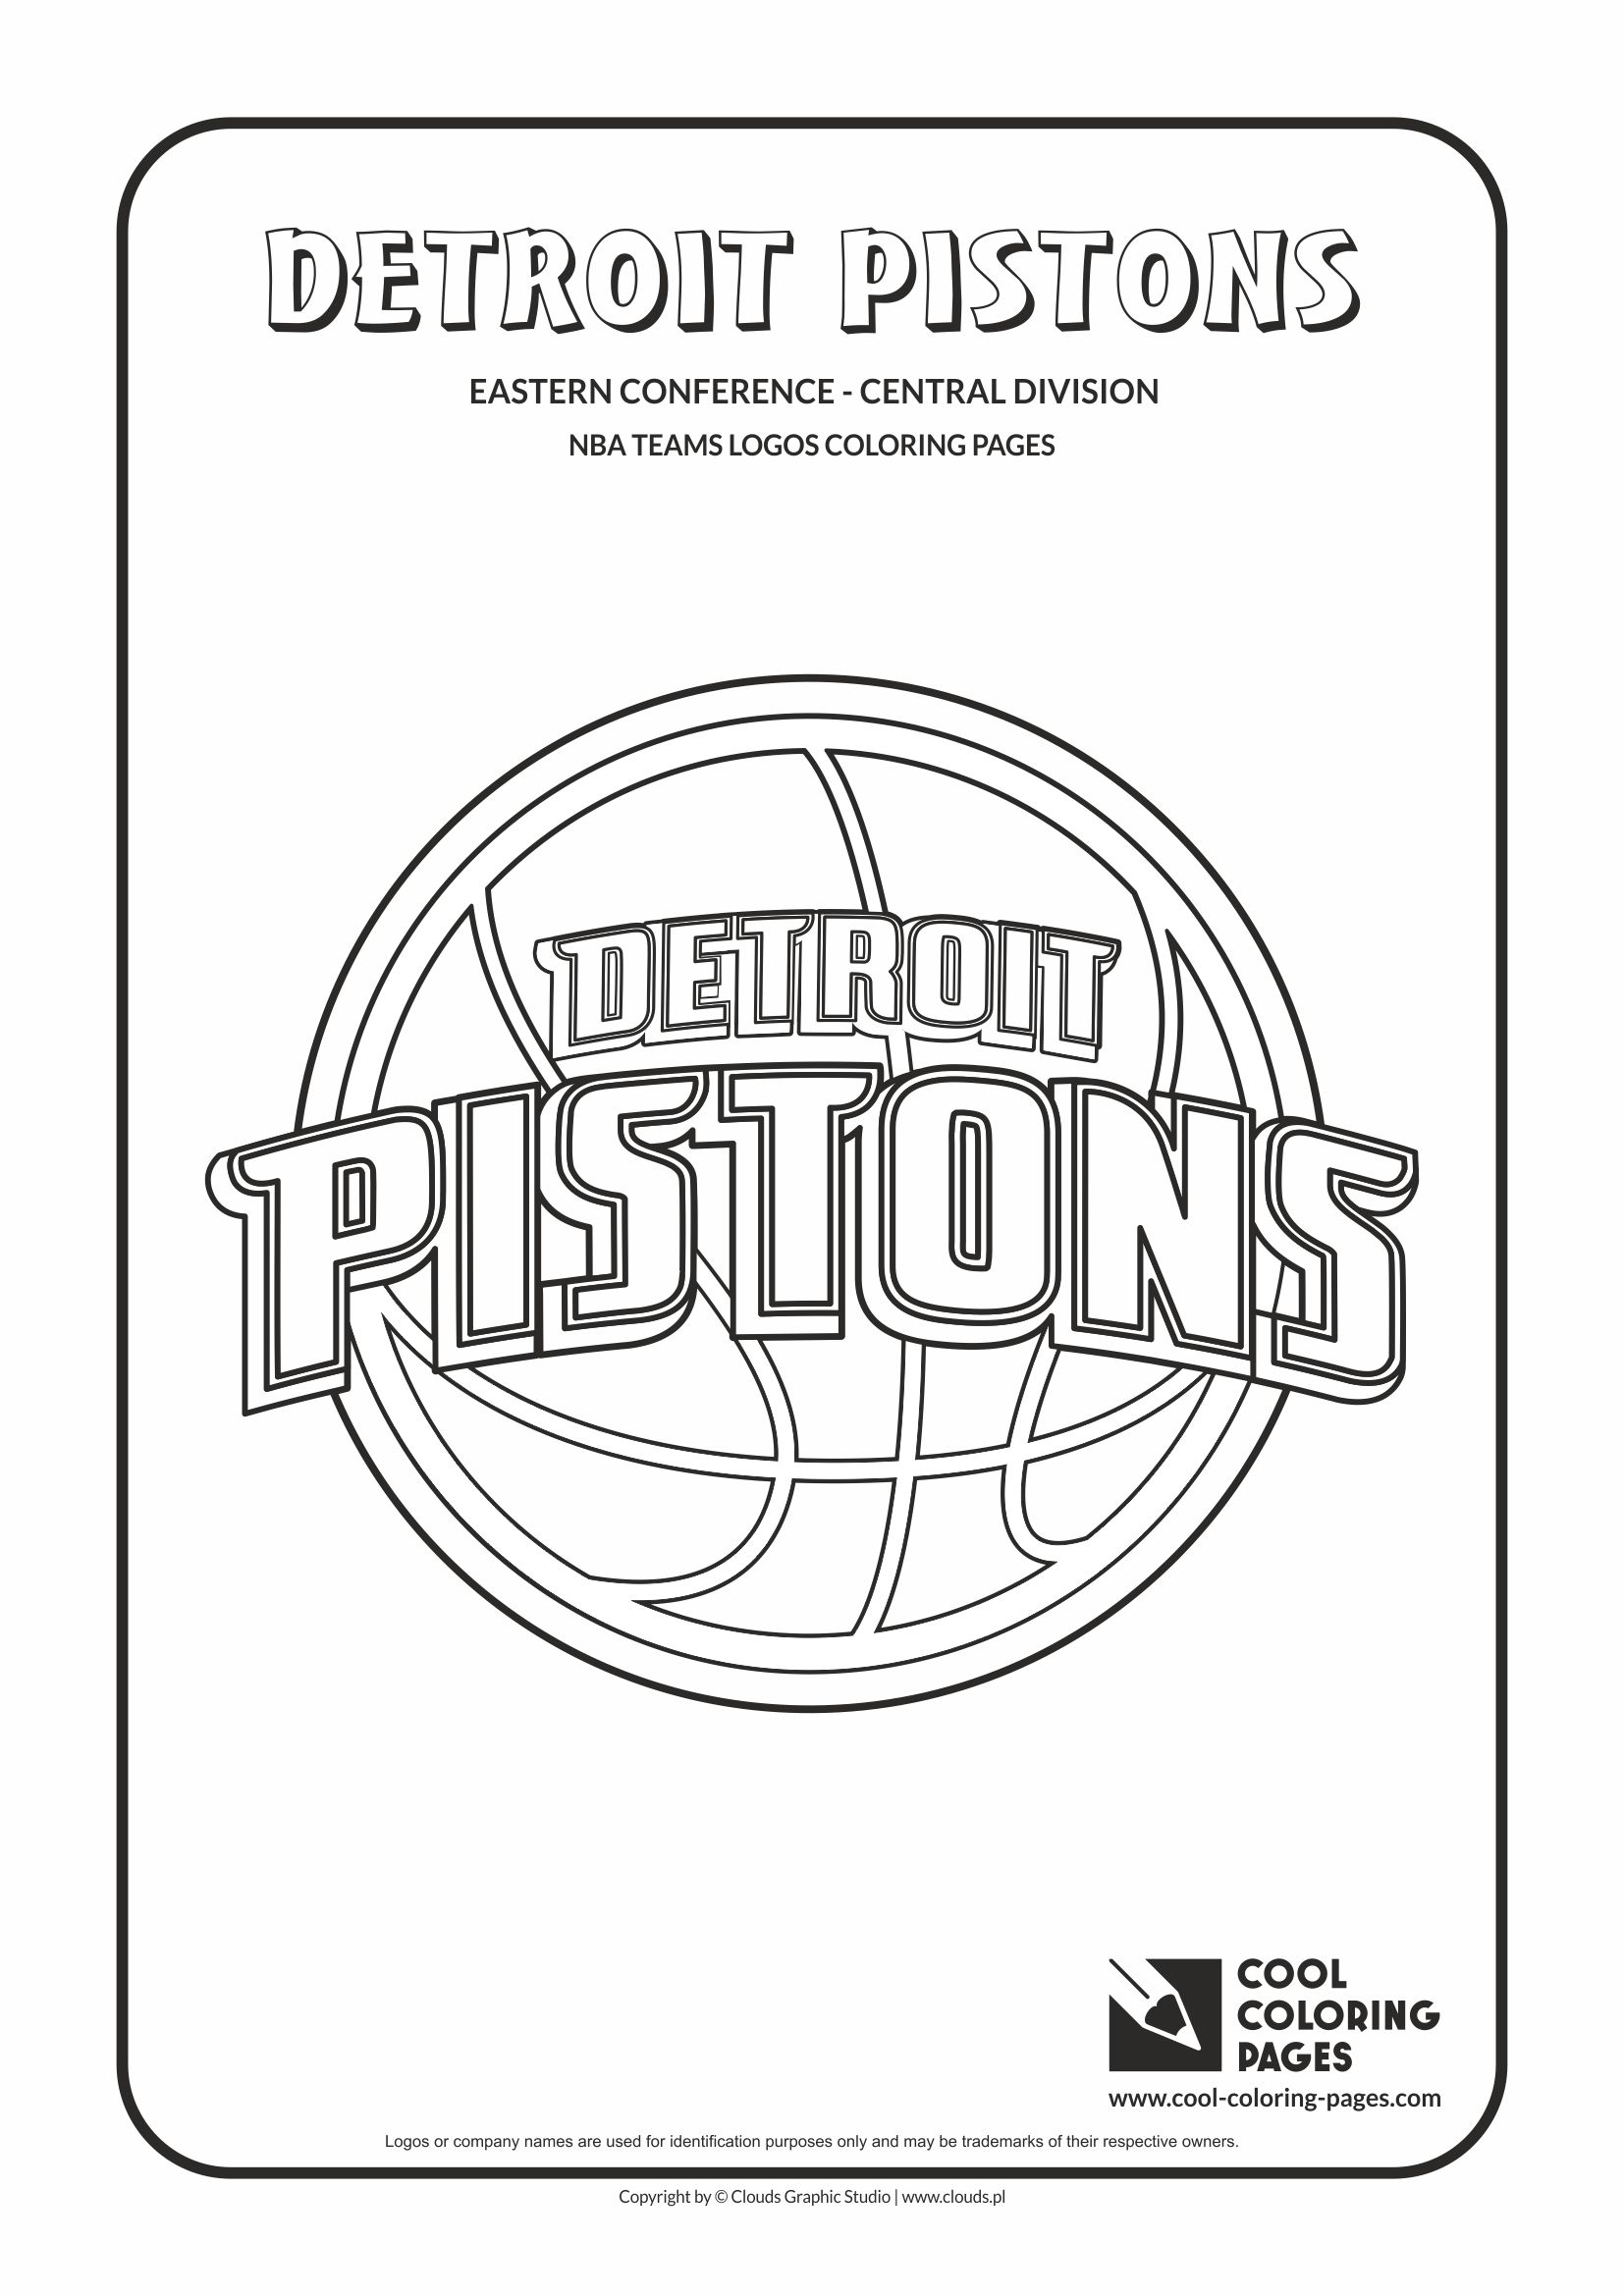 Cool Coloring Pages - NBA Teams Logos / Detroit Pistons logo / Coloring page with Detroit Pistonss logo